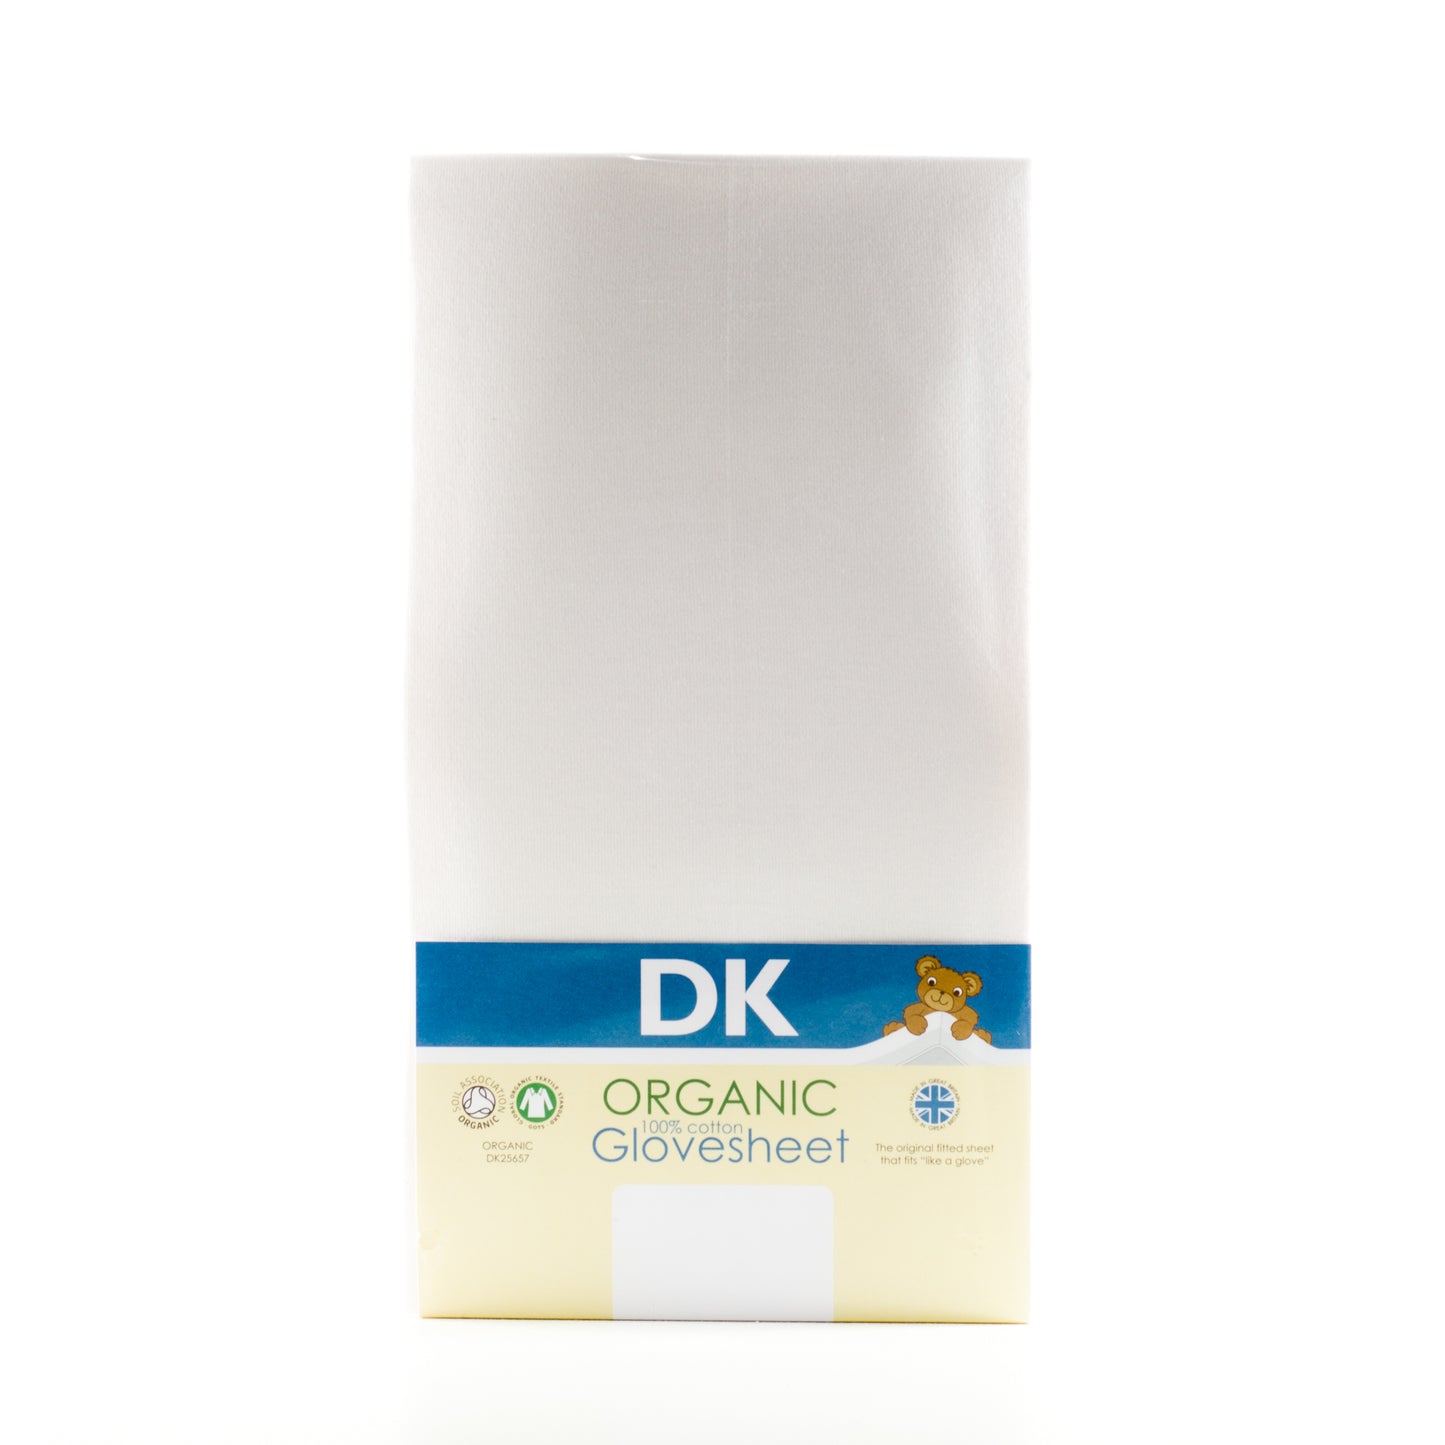 DK Organic Glovesheet-Cot